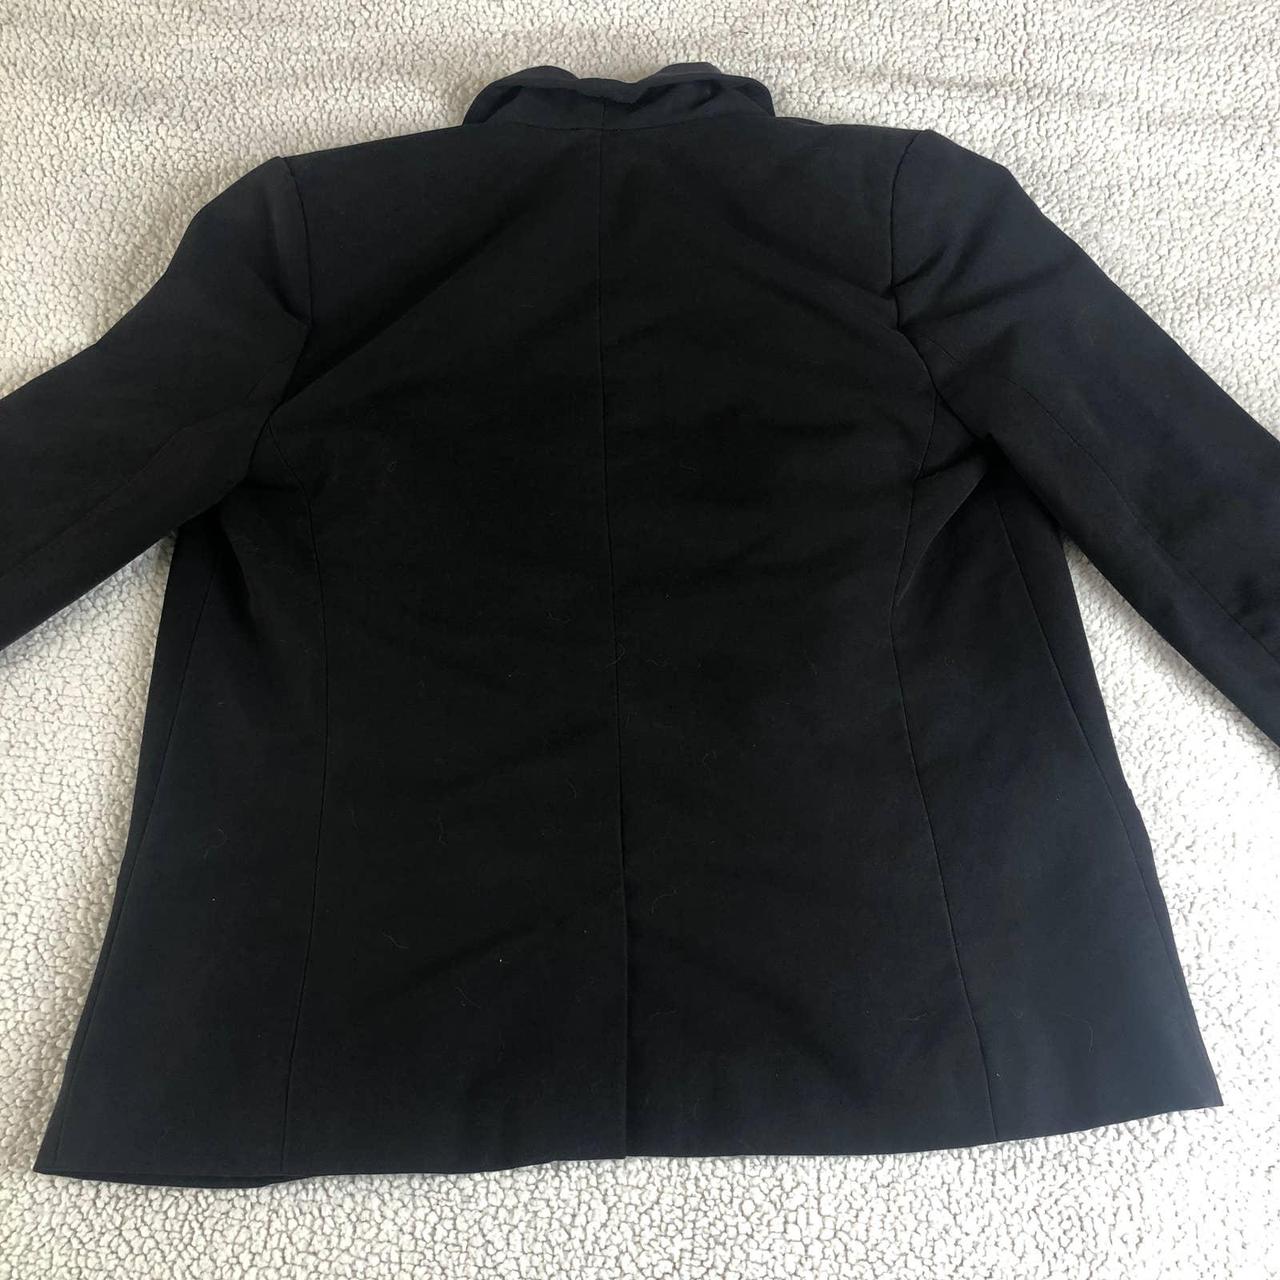 Product Image 3 - ASOS black professional blazer

DETAIL: black